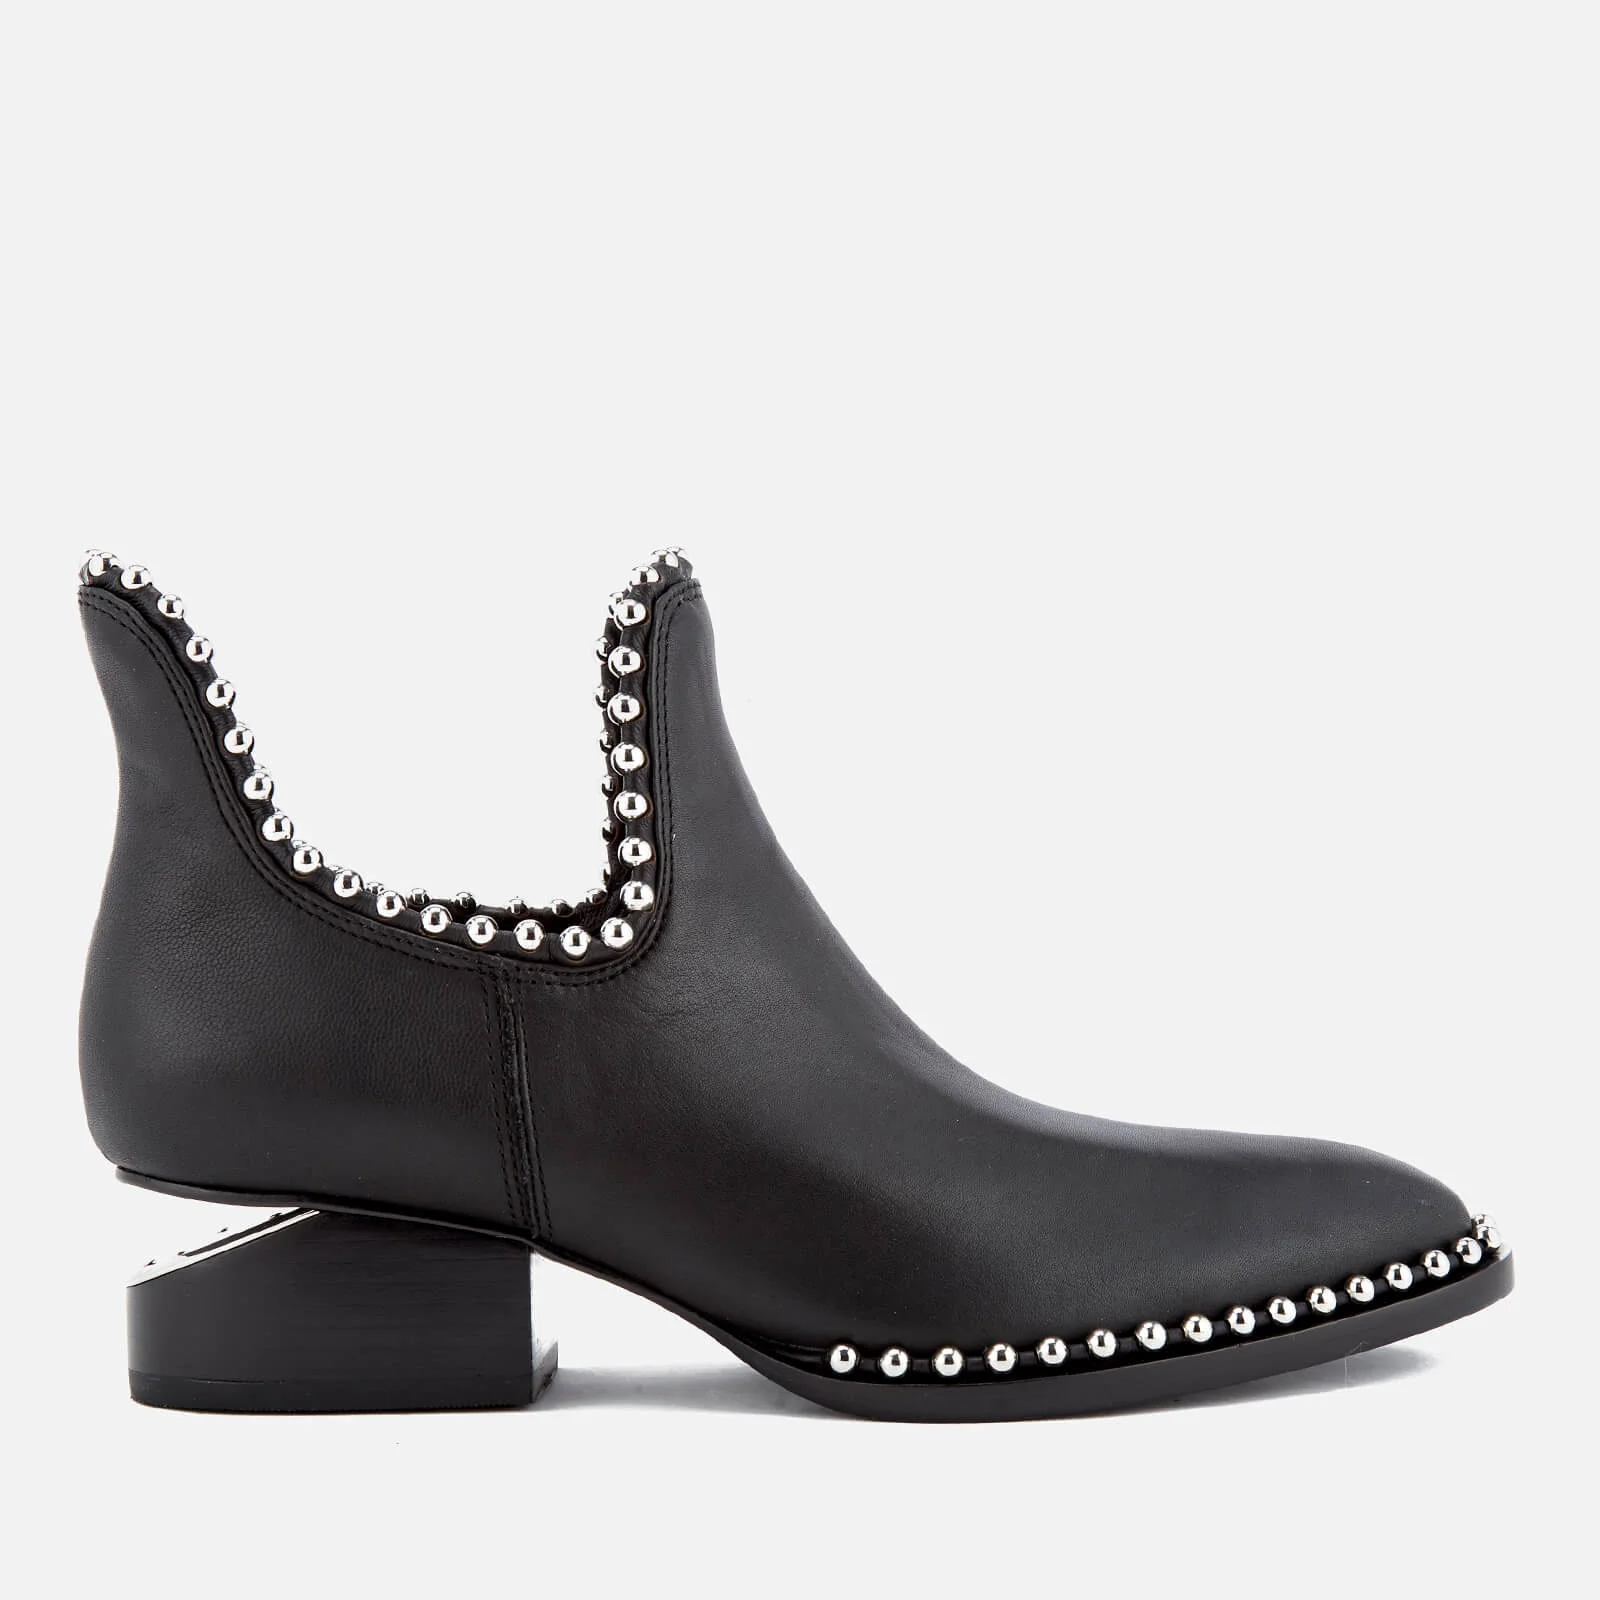 Alexander Wang Women's Kori Leather Studded Heeled Ankle Boots - Black Image 1